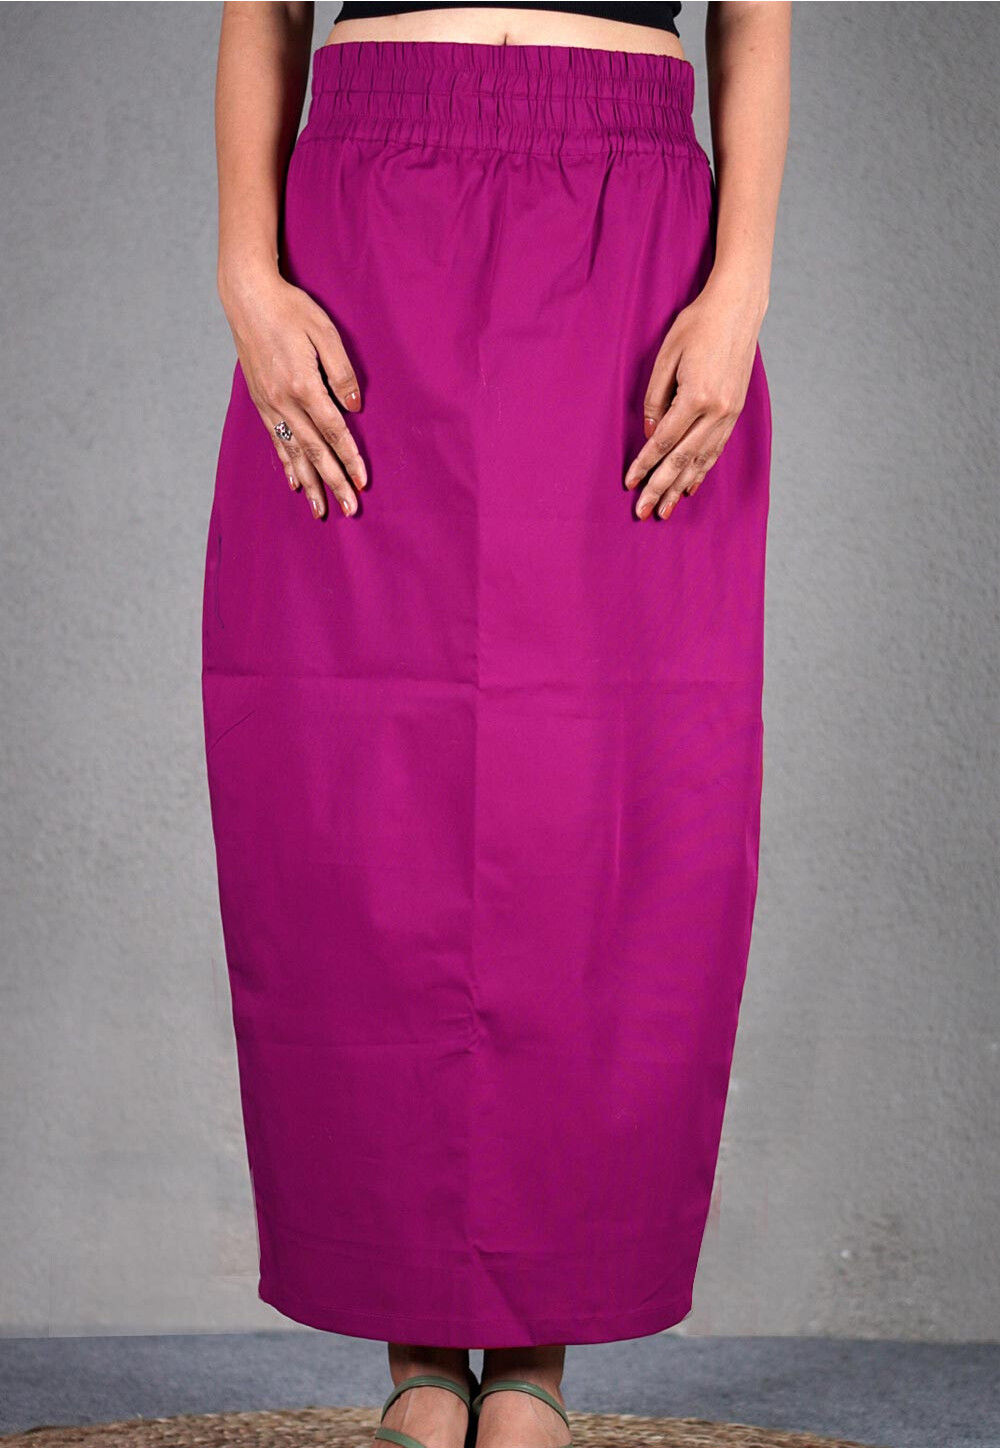 Solid Color Lycra Cotton Shapewear Petticoat in Fuchsia